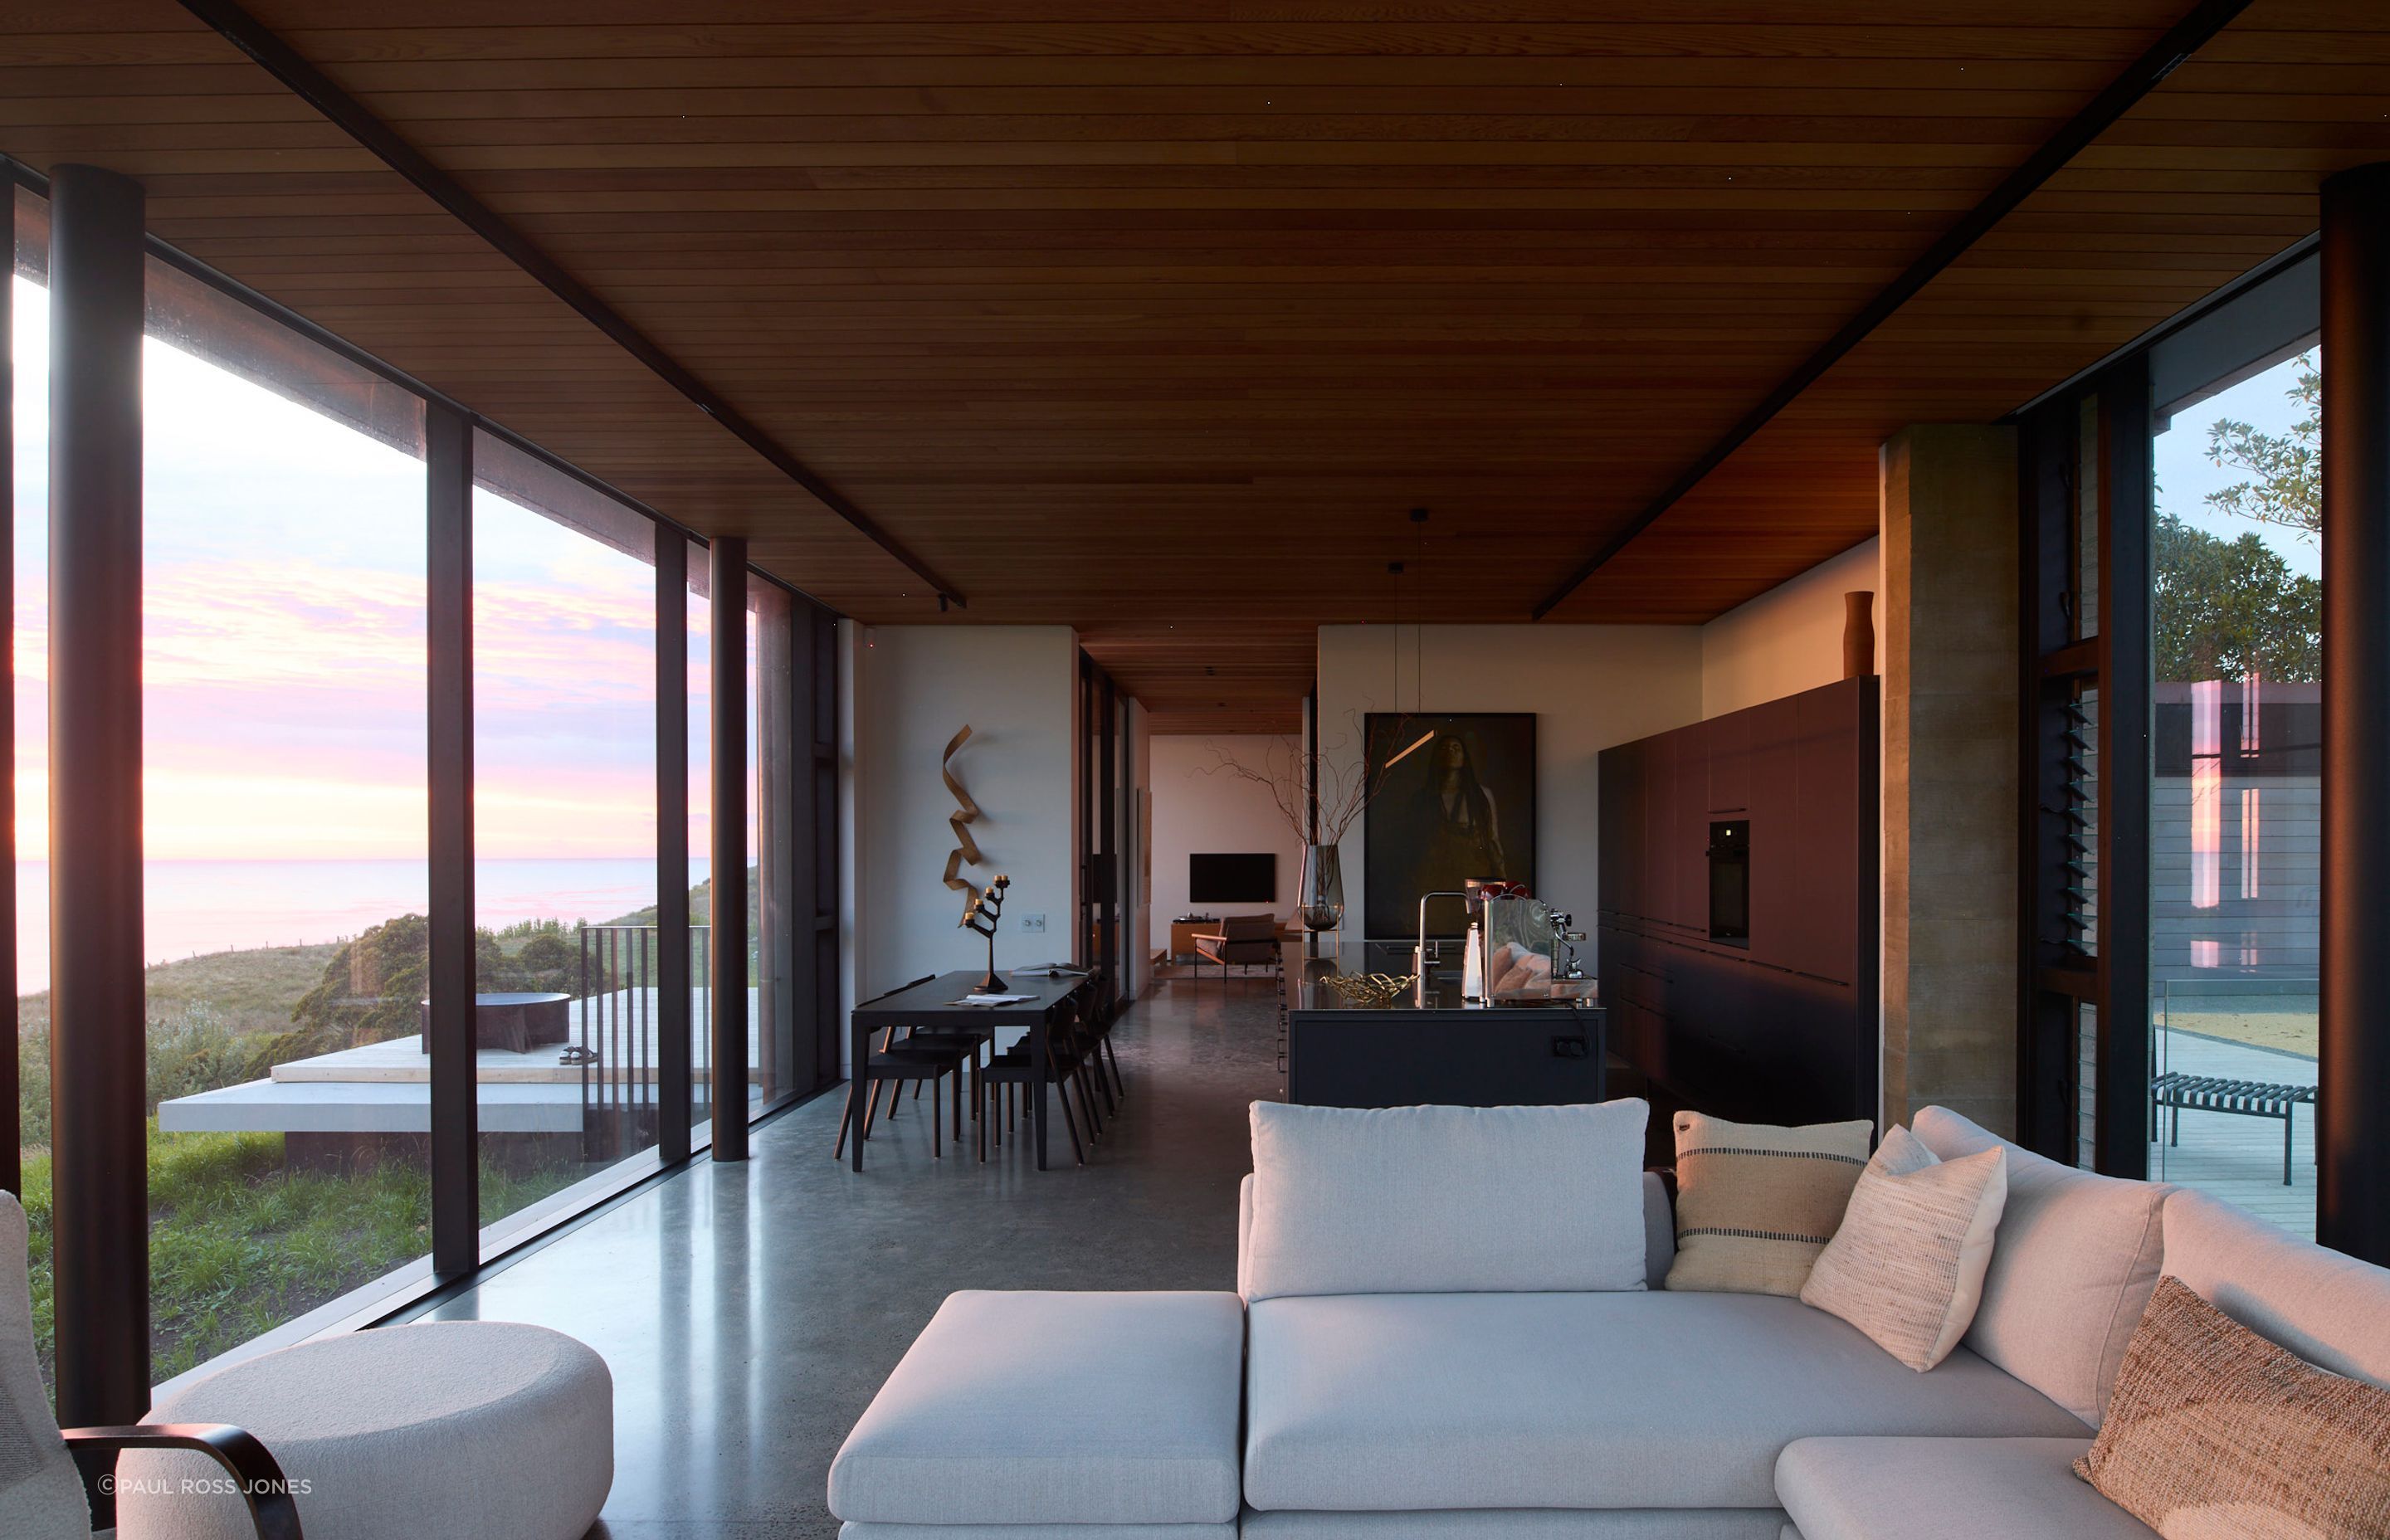 The living room invites light through all sides